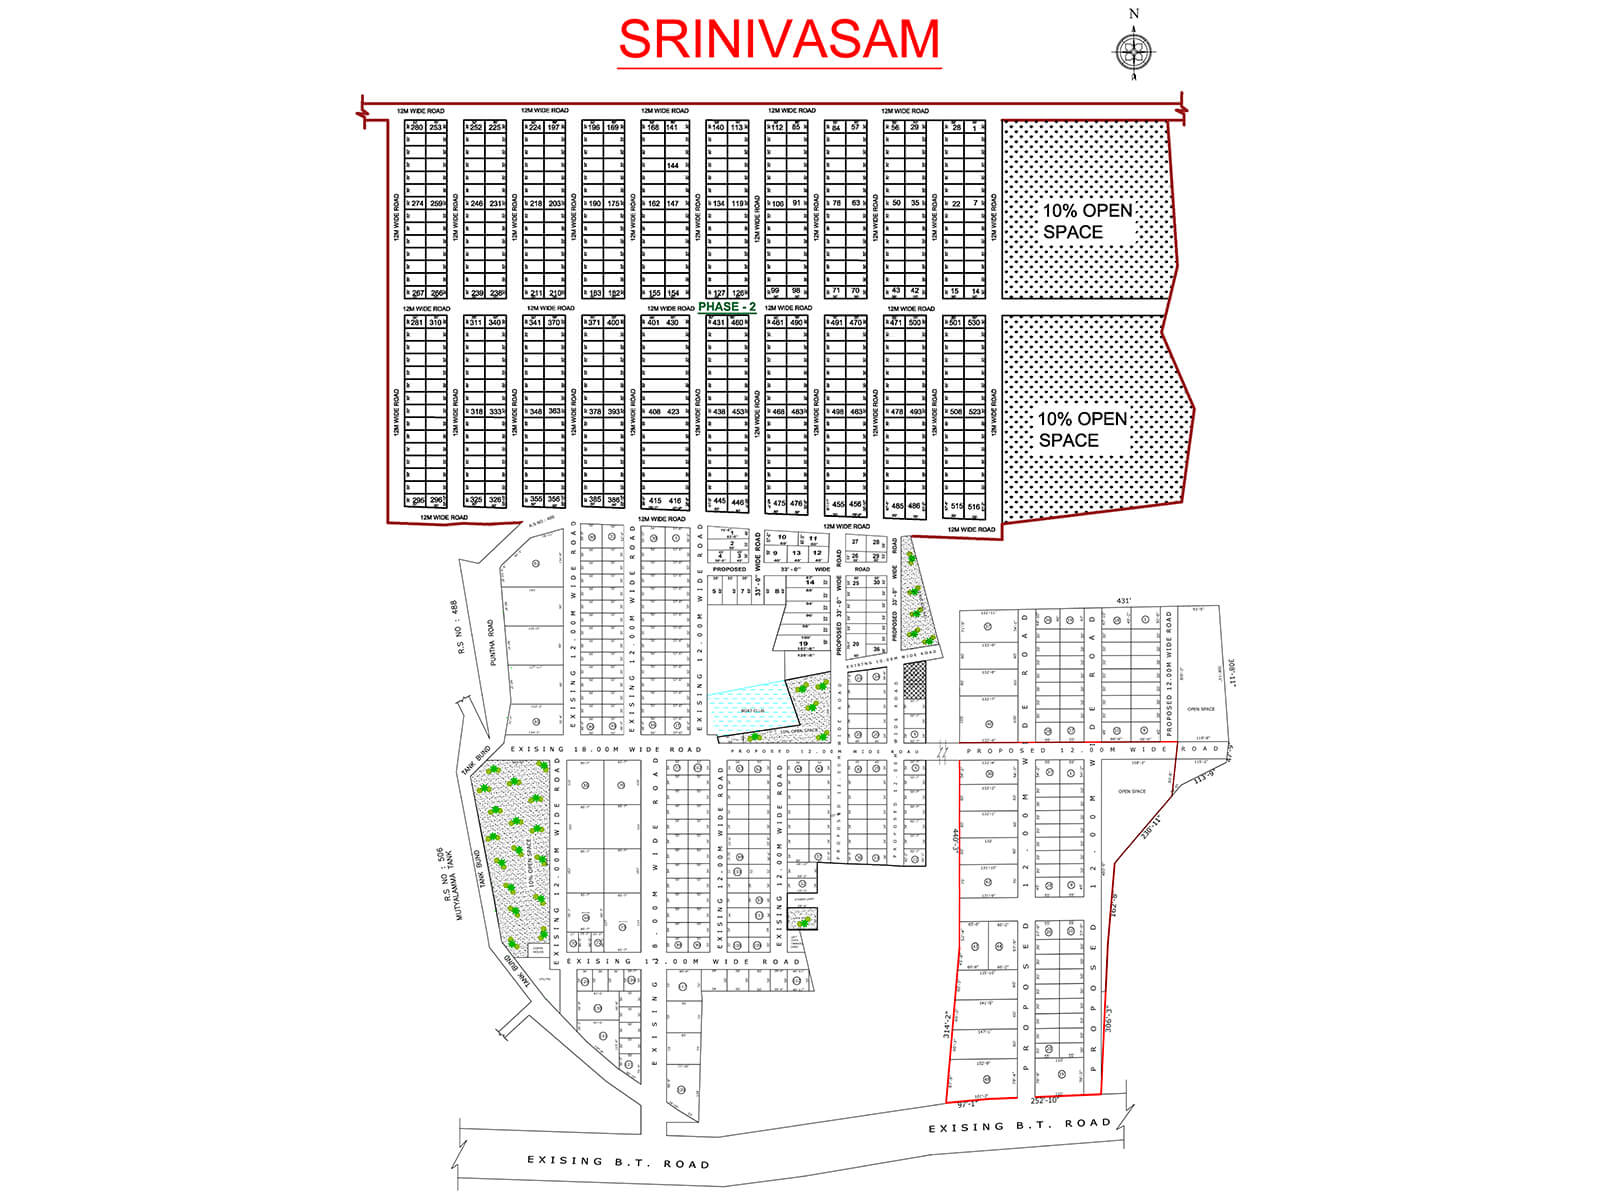 Sri Nivasam floor plan layout